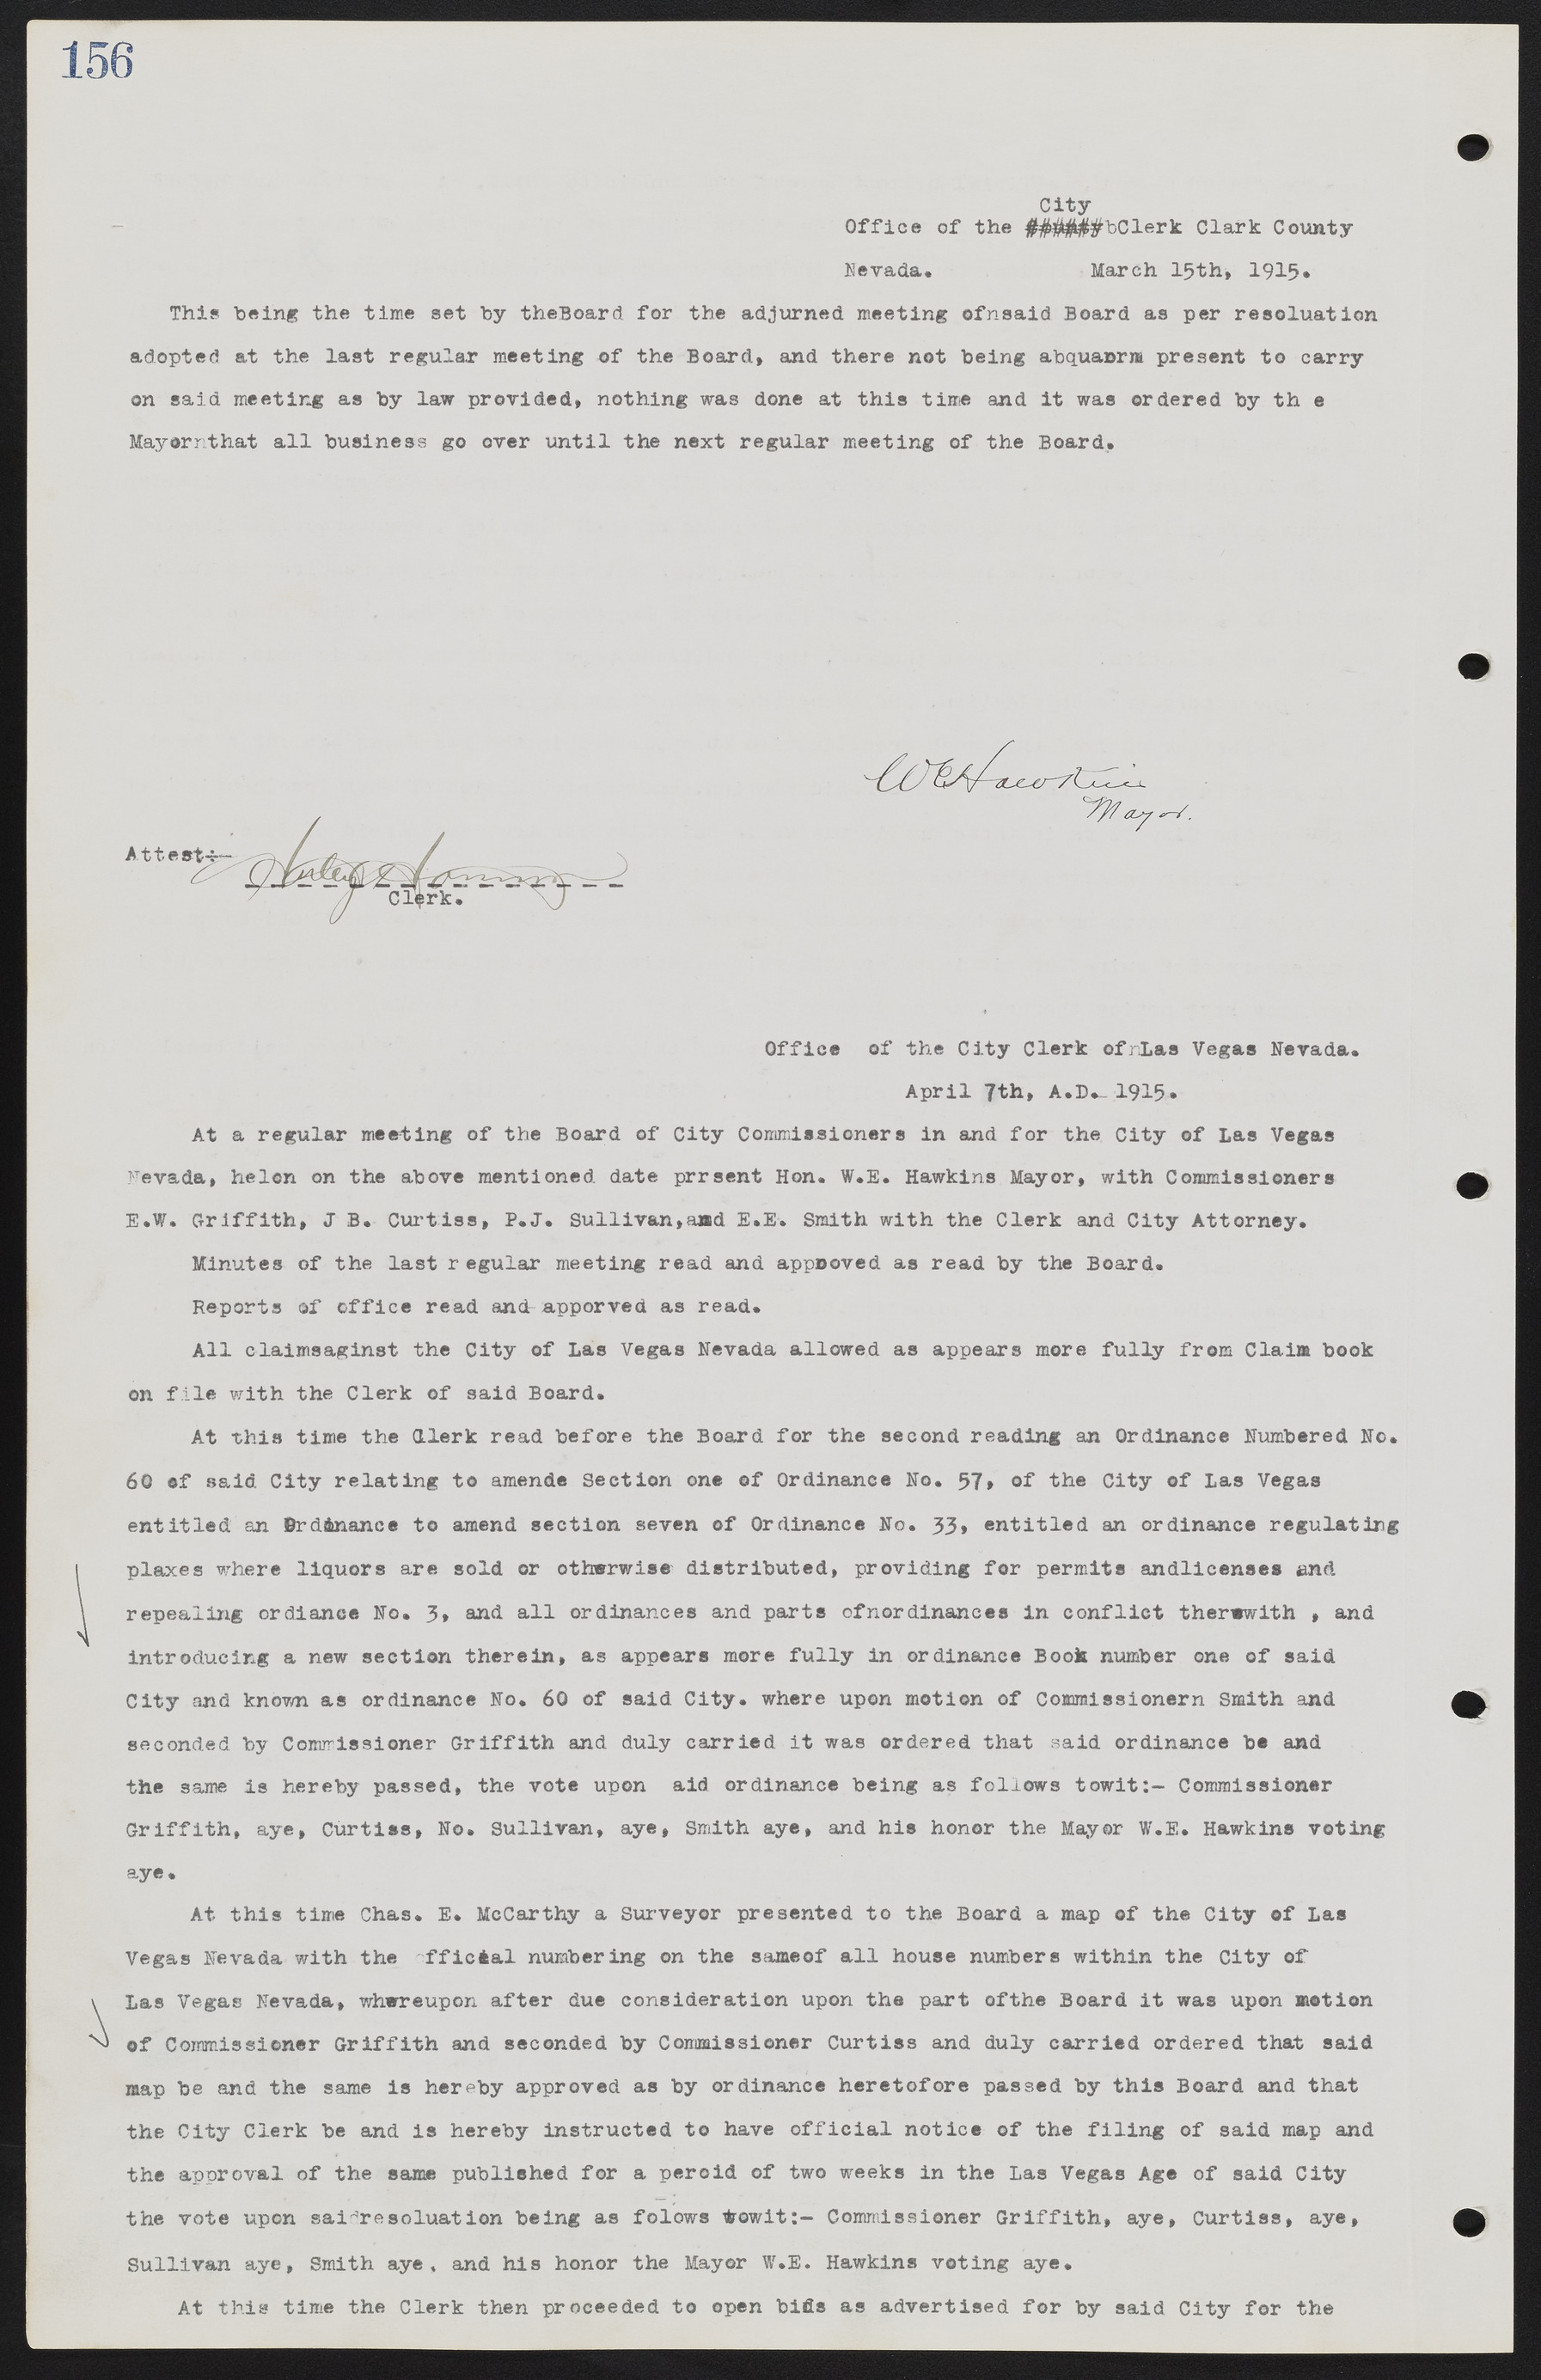 Las Vegas City Commission Minutes, June 22, 1911 to February 7, 1922, lvc000001-172